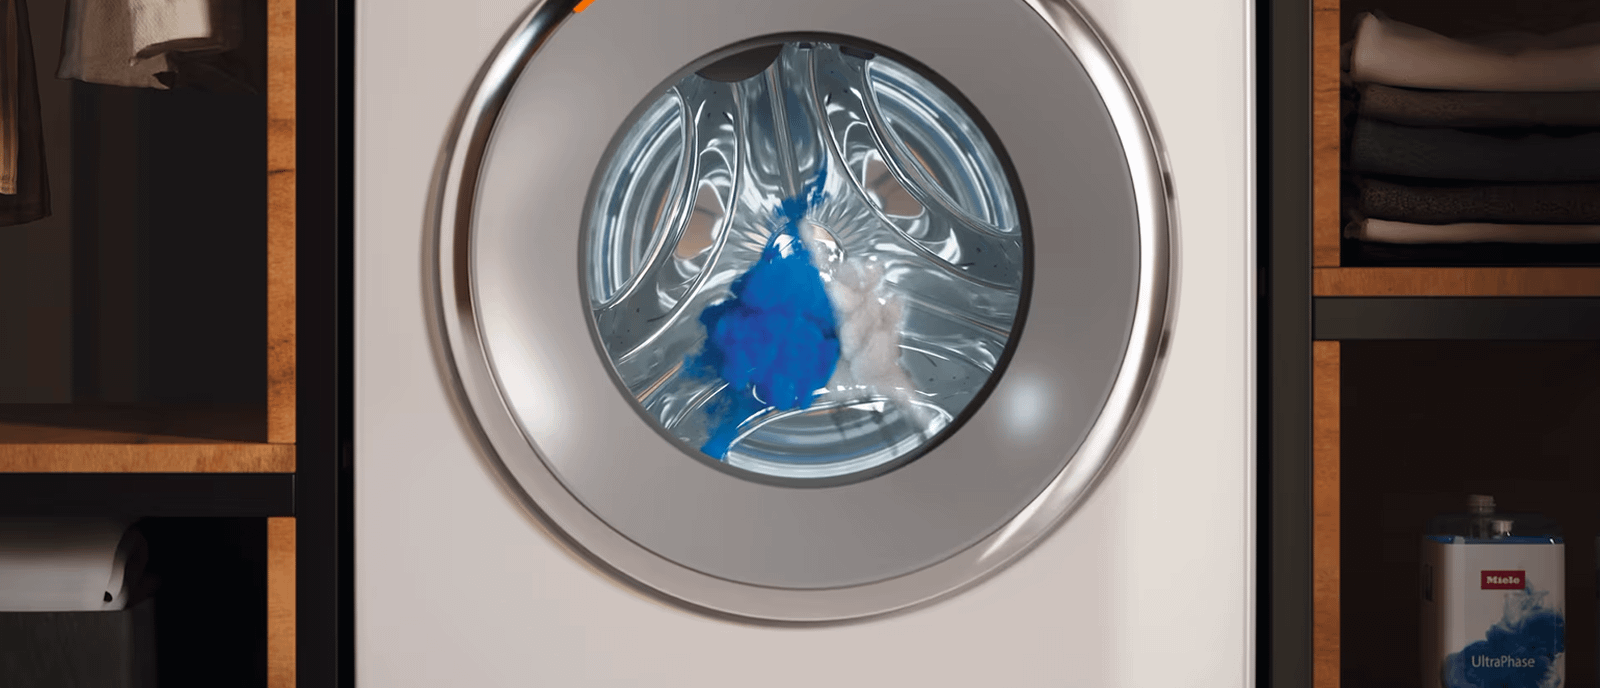 Miele auto dosing washing machine showing distributing of detergent